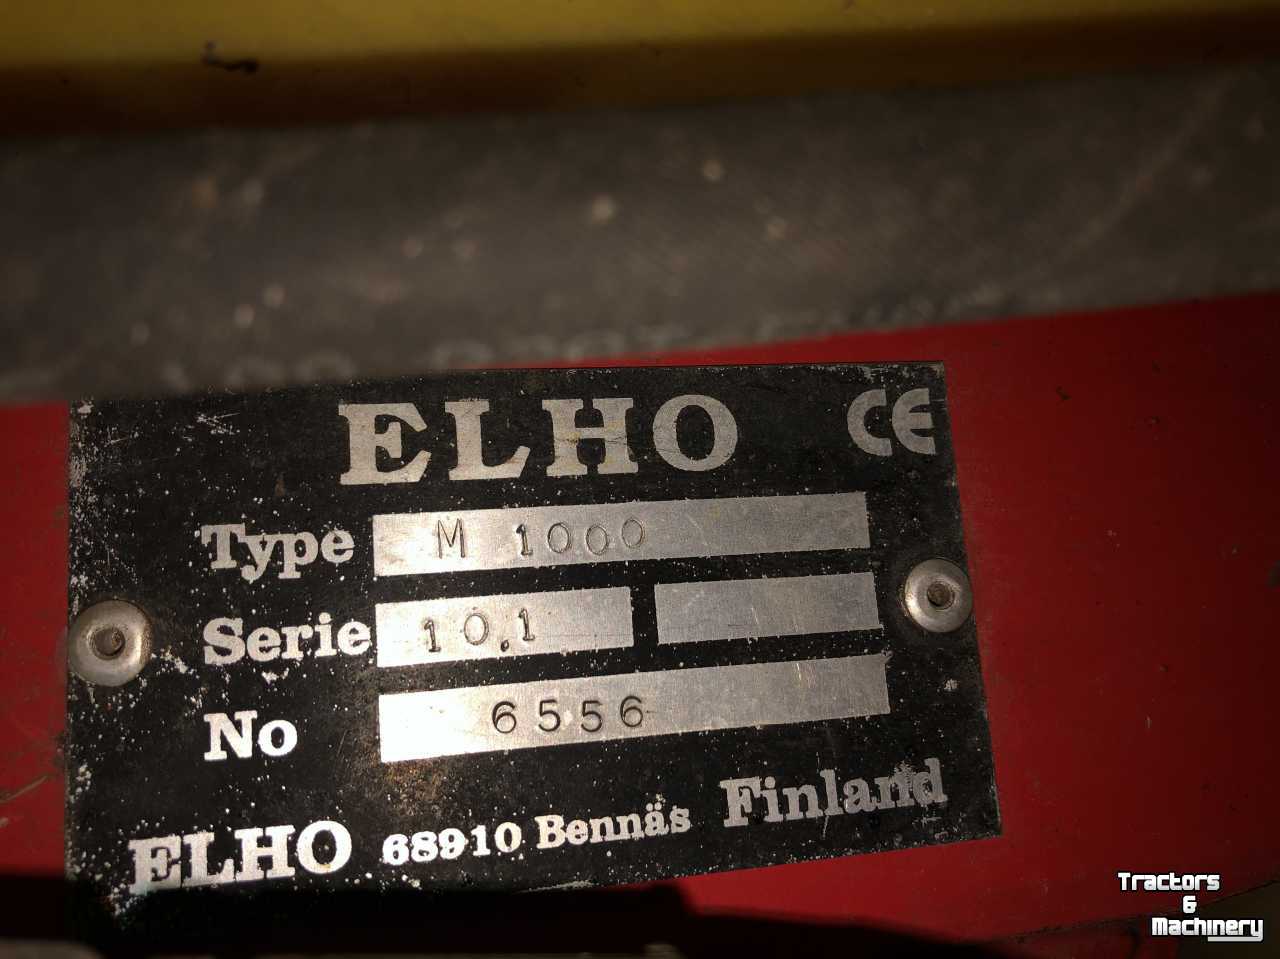 Other Elho M 1000